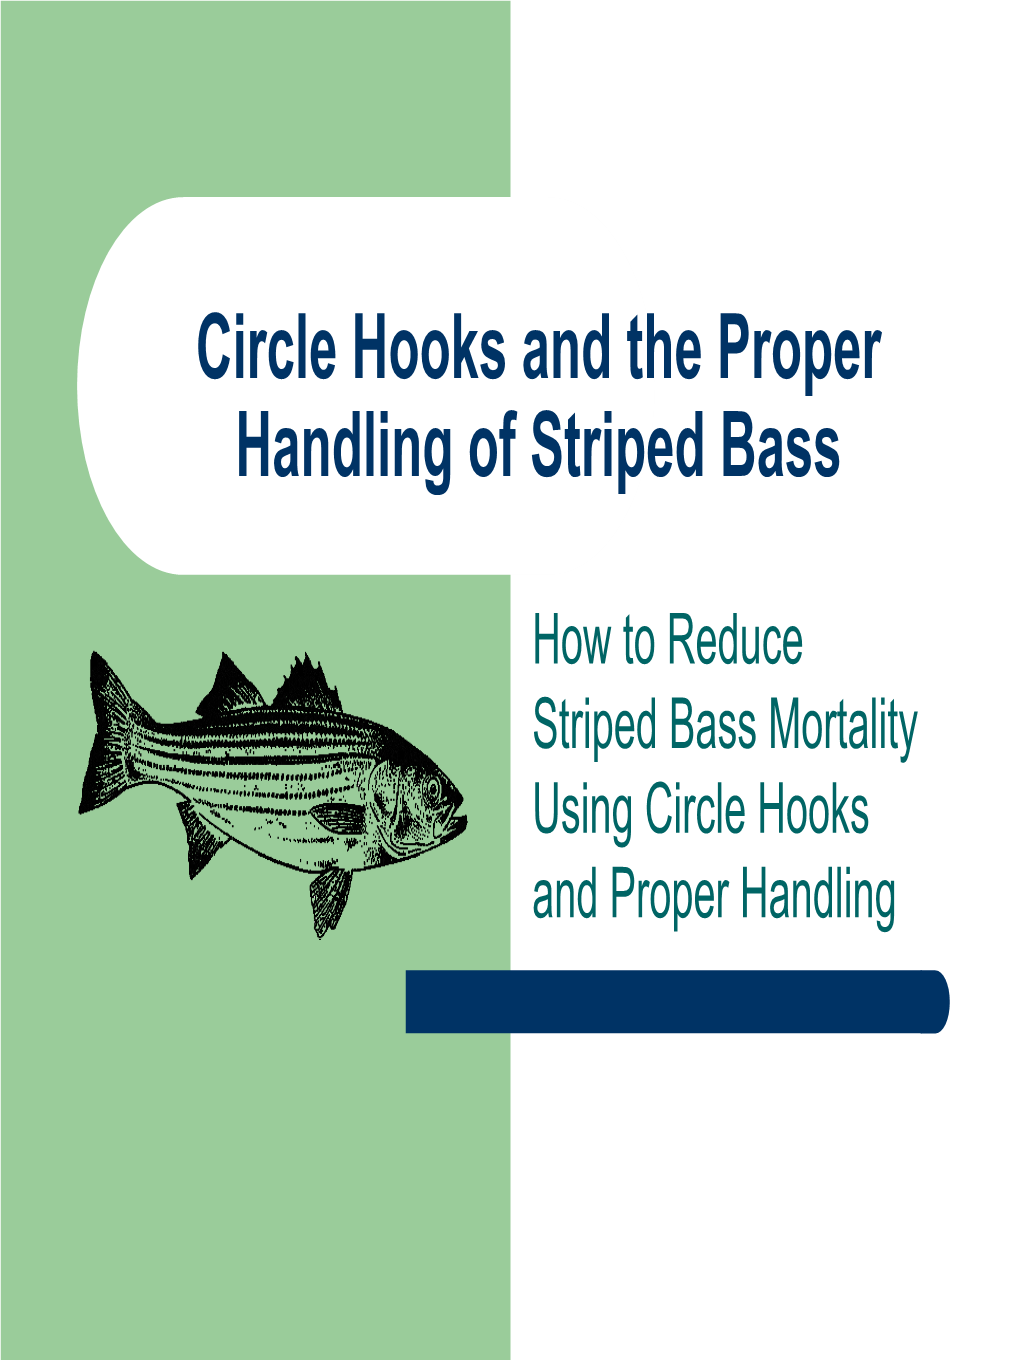 Circle Hooks and Striped Bass